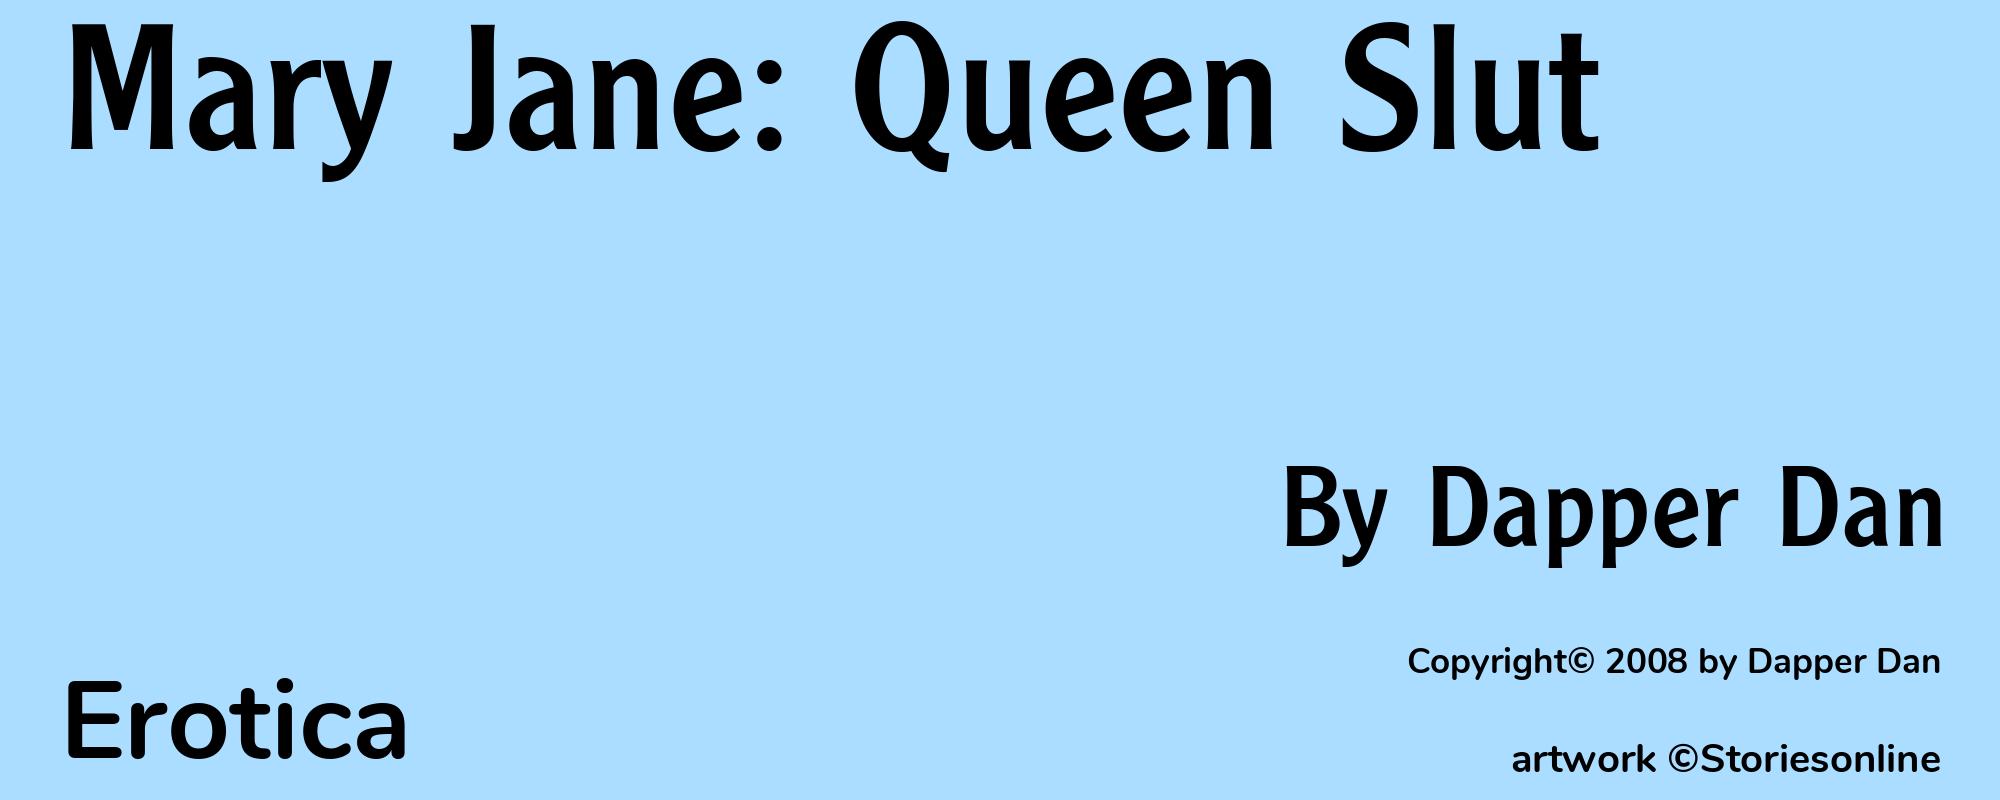 Mary Jane: Queen Slut - Cover